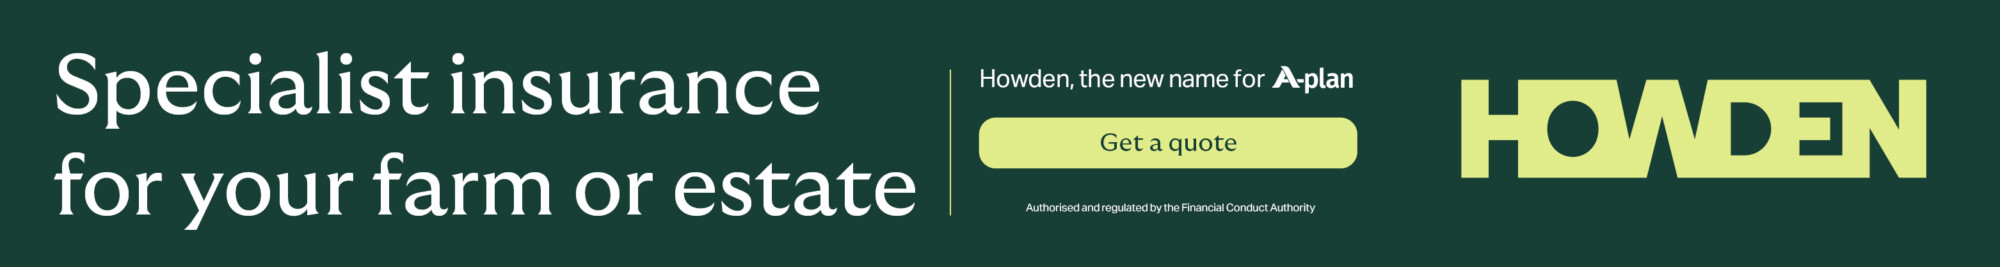 Howden Rural Insurance advert on farming news site